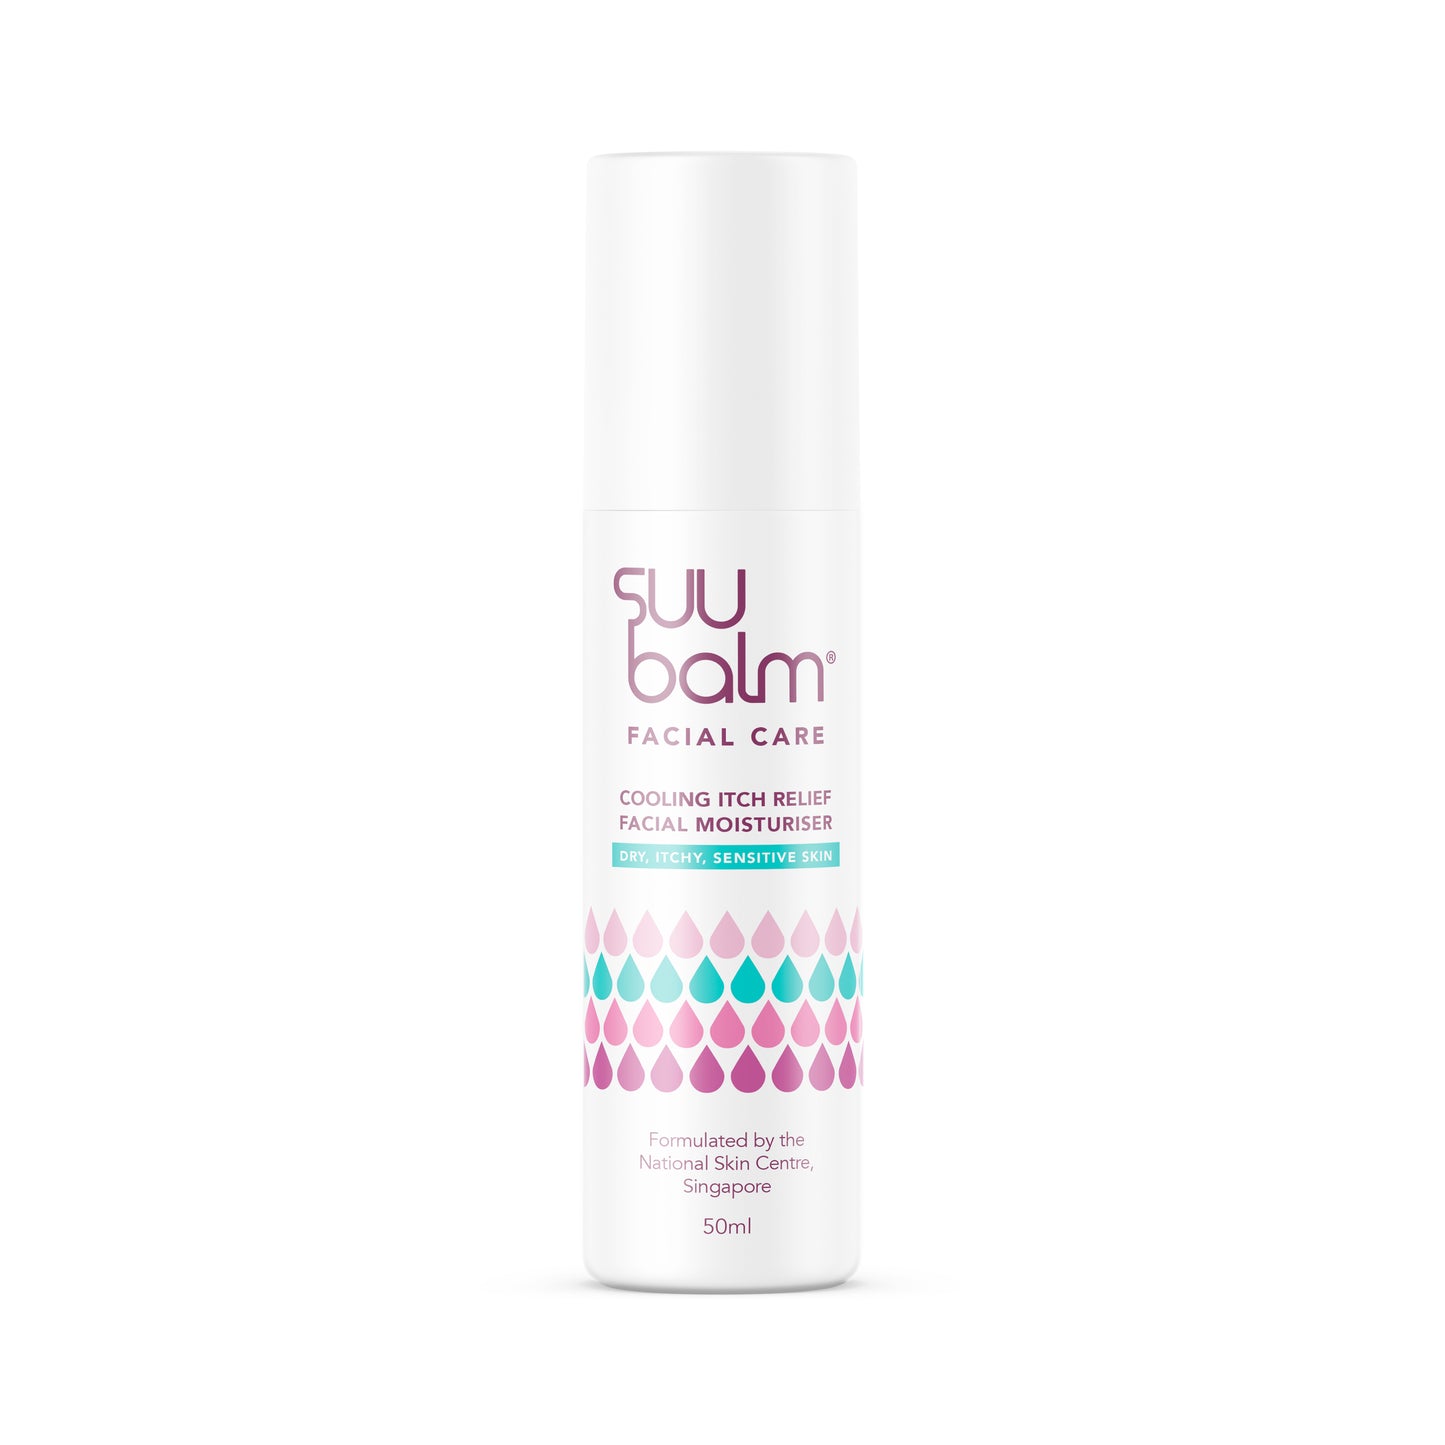 Suu Balm® Facial Care Cooling Itch Relief Facial Moisturiser 50ml - Product Image